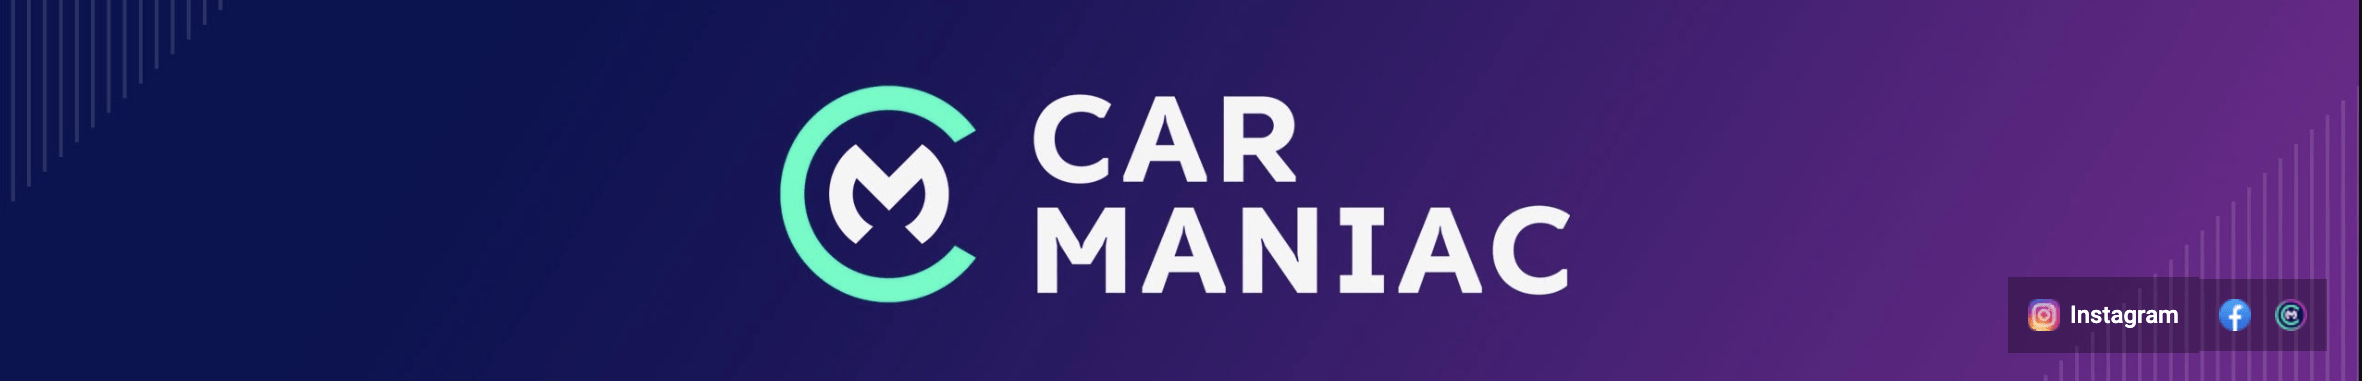 Car Maniac Youtube Cover